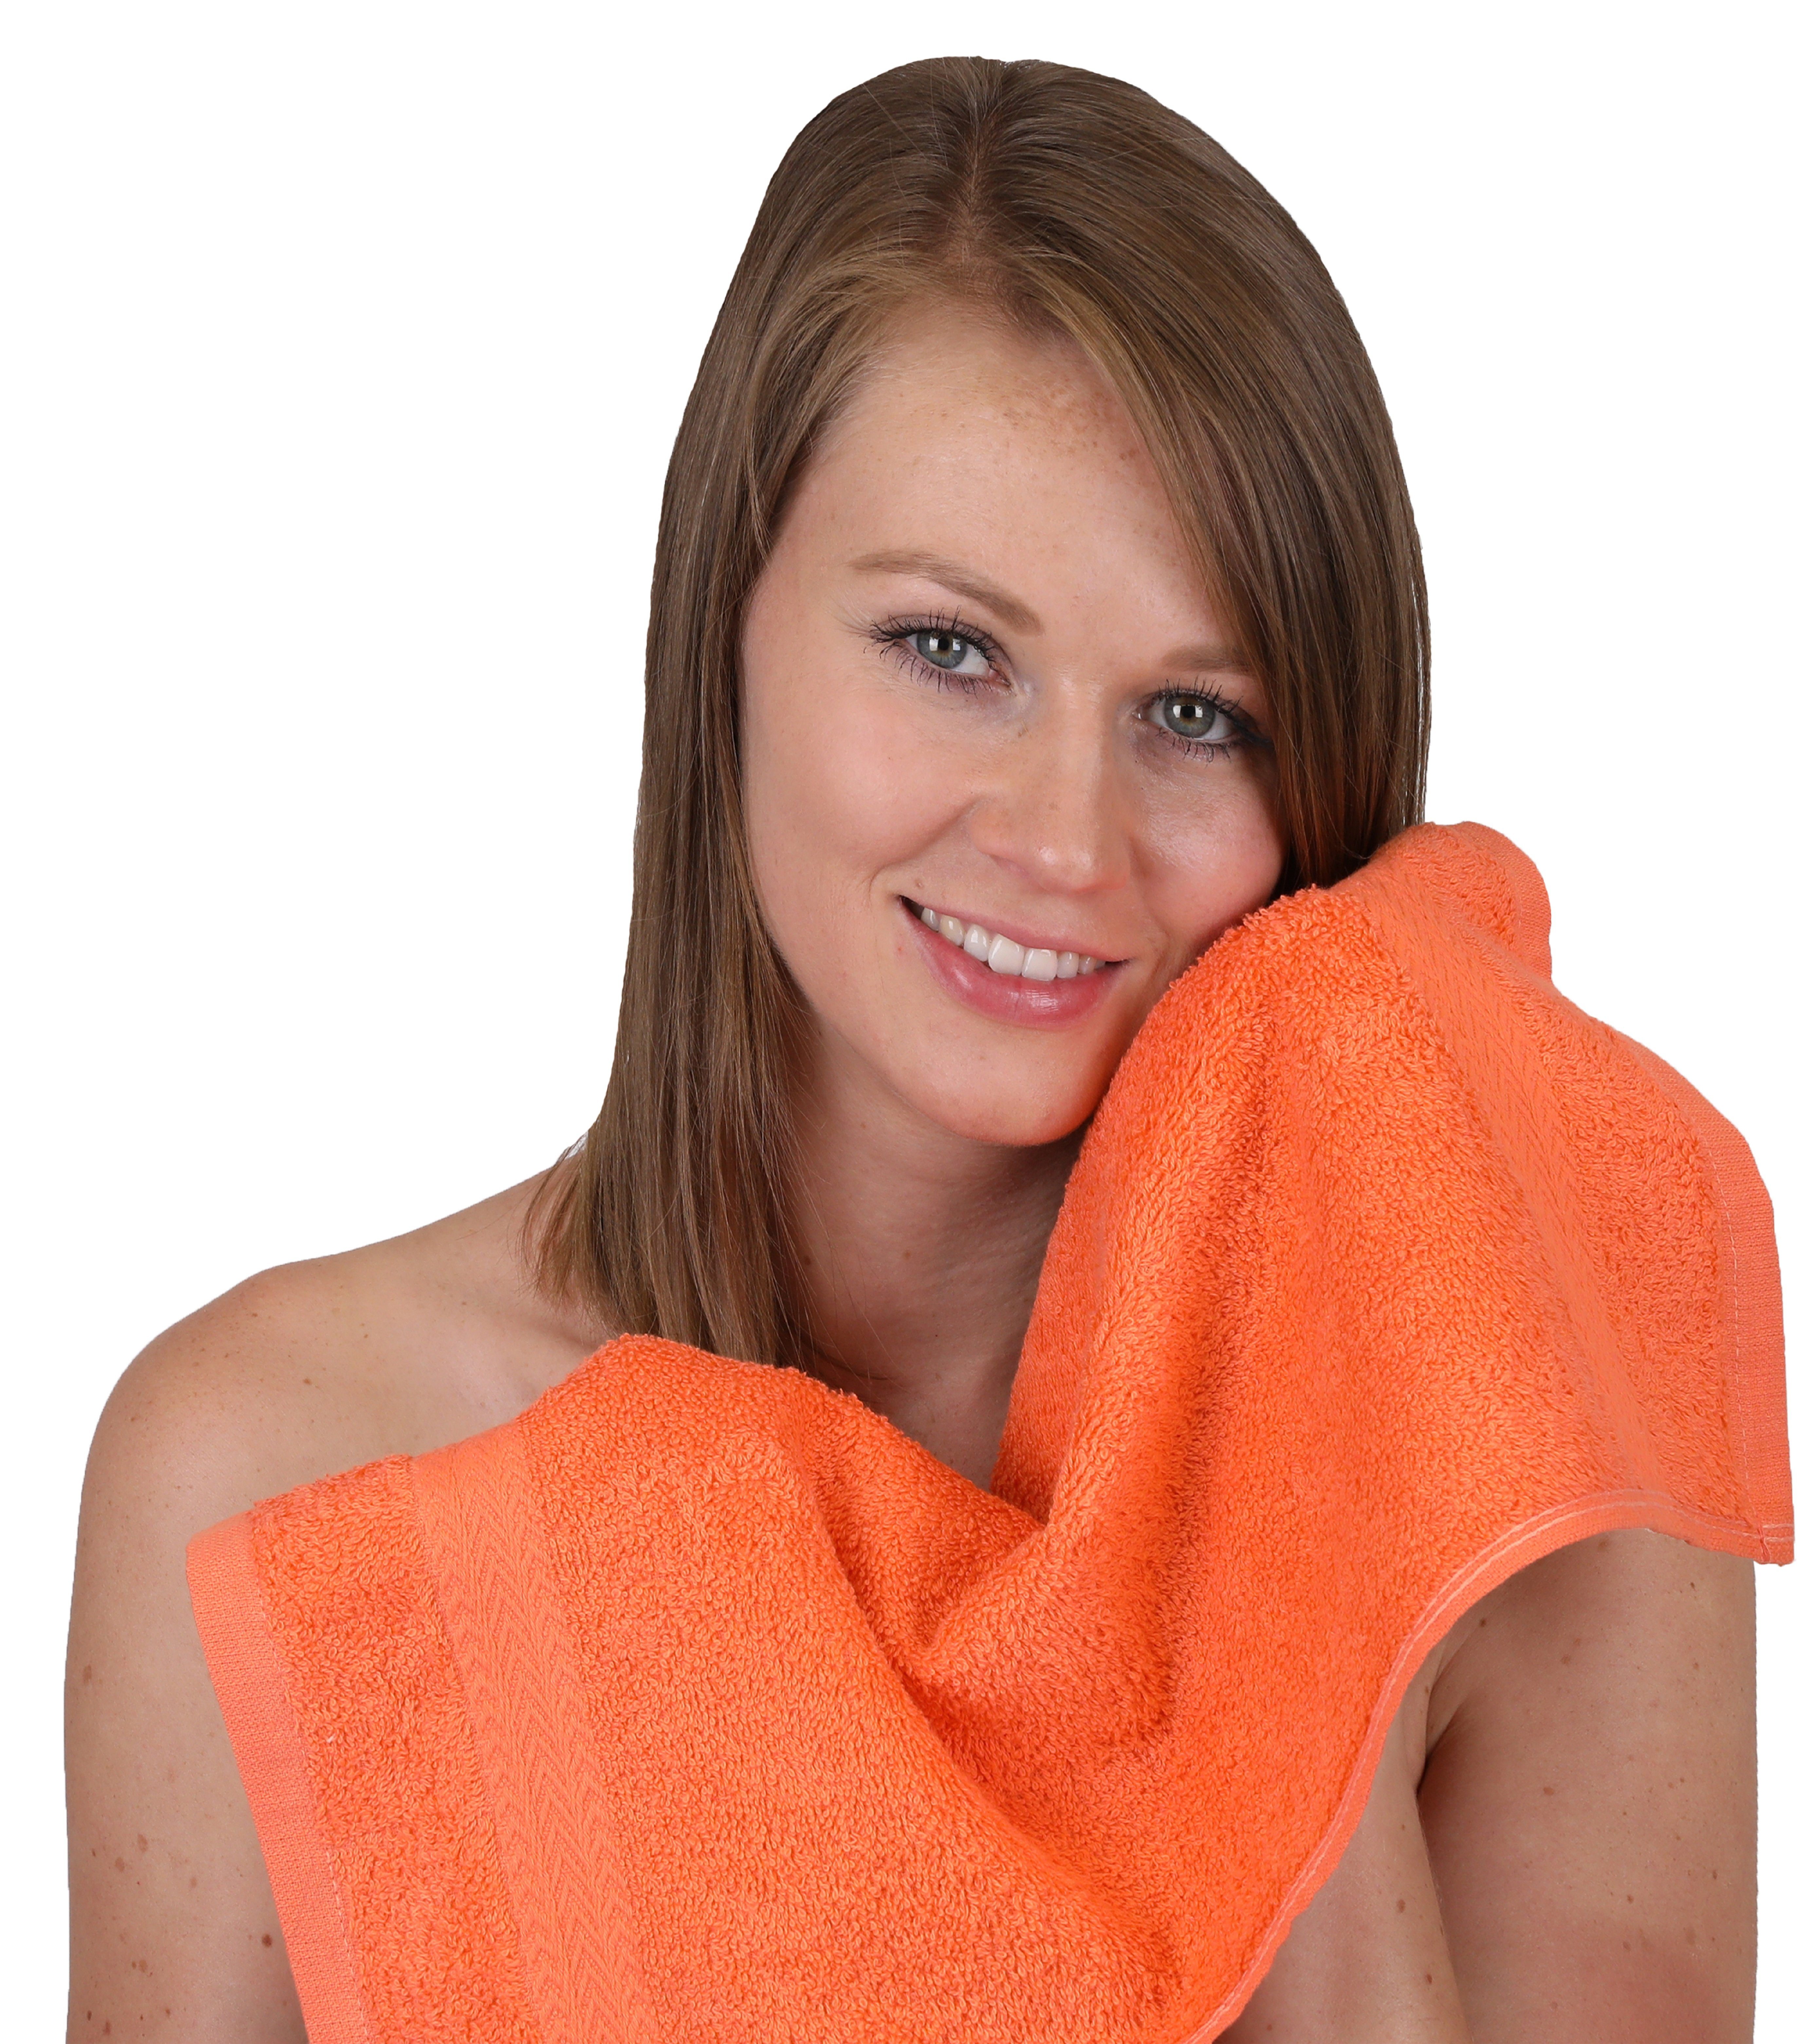 Handtuch Set Handtuch (12-tlg) heugrün, Gästetücher Baumwolle Premium 100% 12-TLG. Set Seiftücher 2 2 2 blutorange 2 Duschtücher Waschhandschuhe Baumwolle, 100% Betz 4 Handtücher Farbe